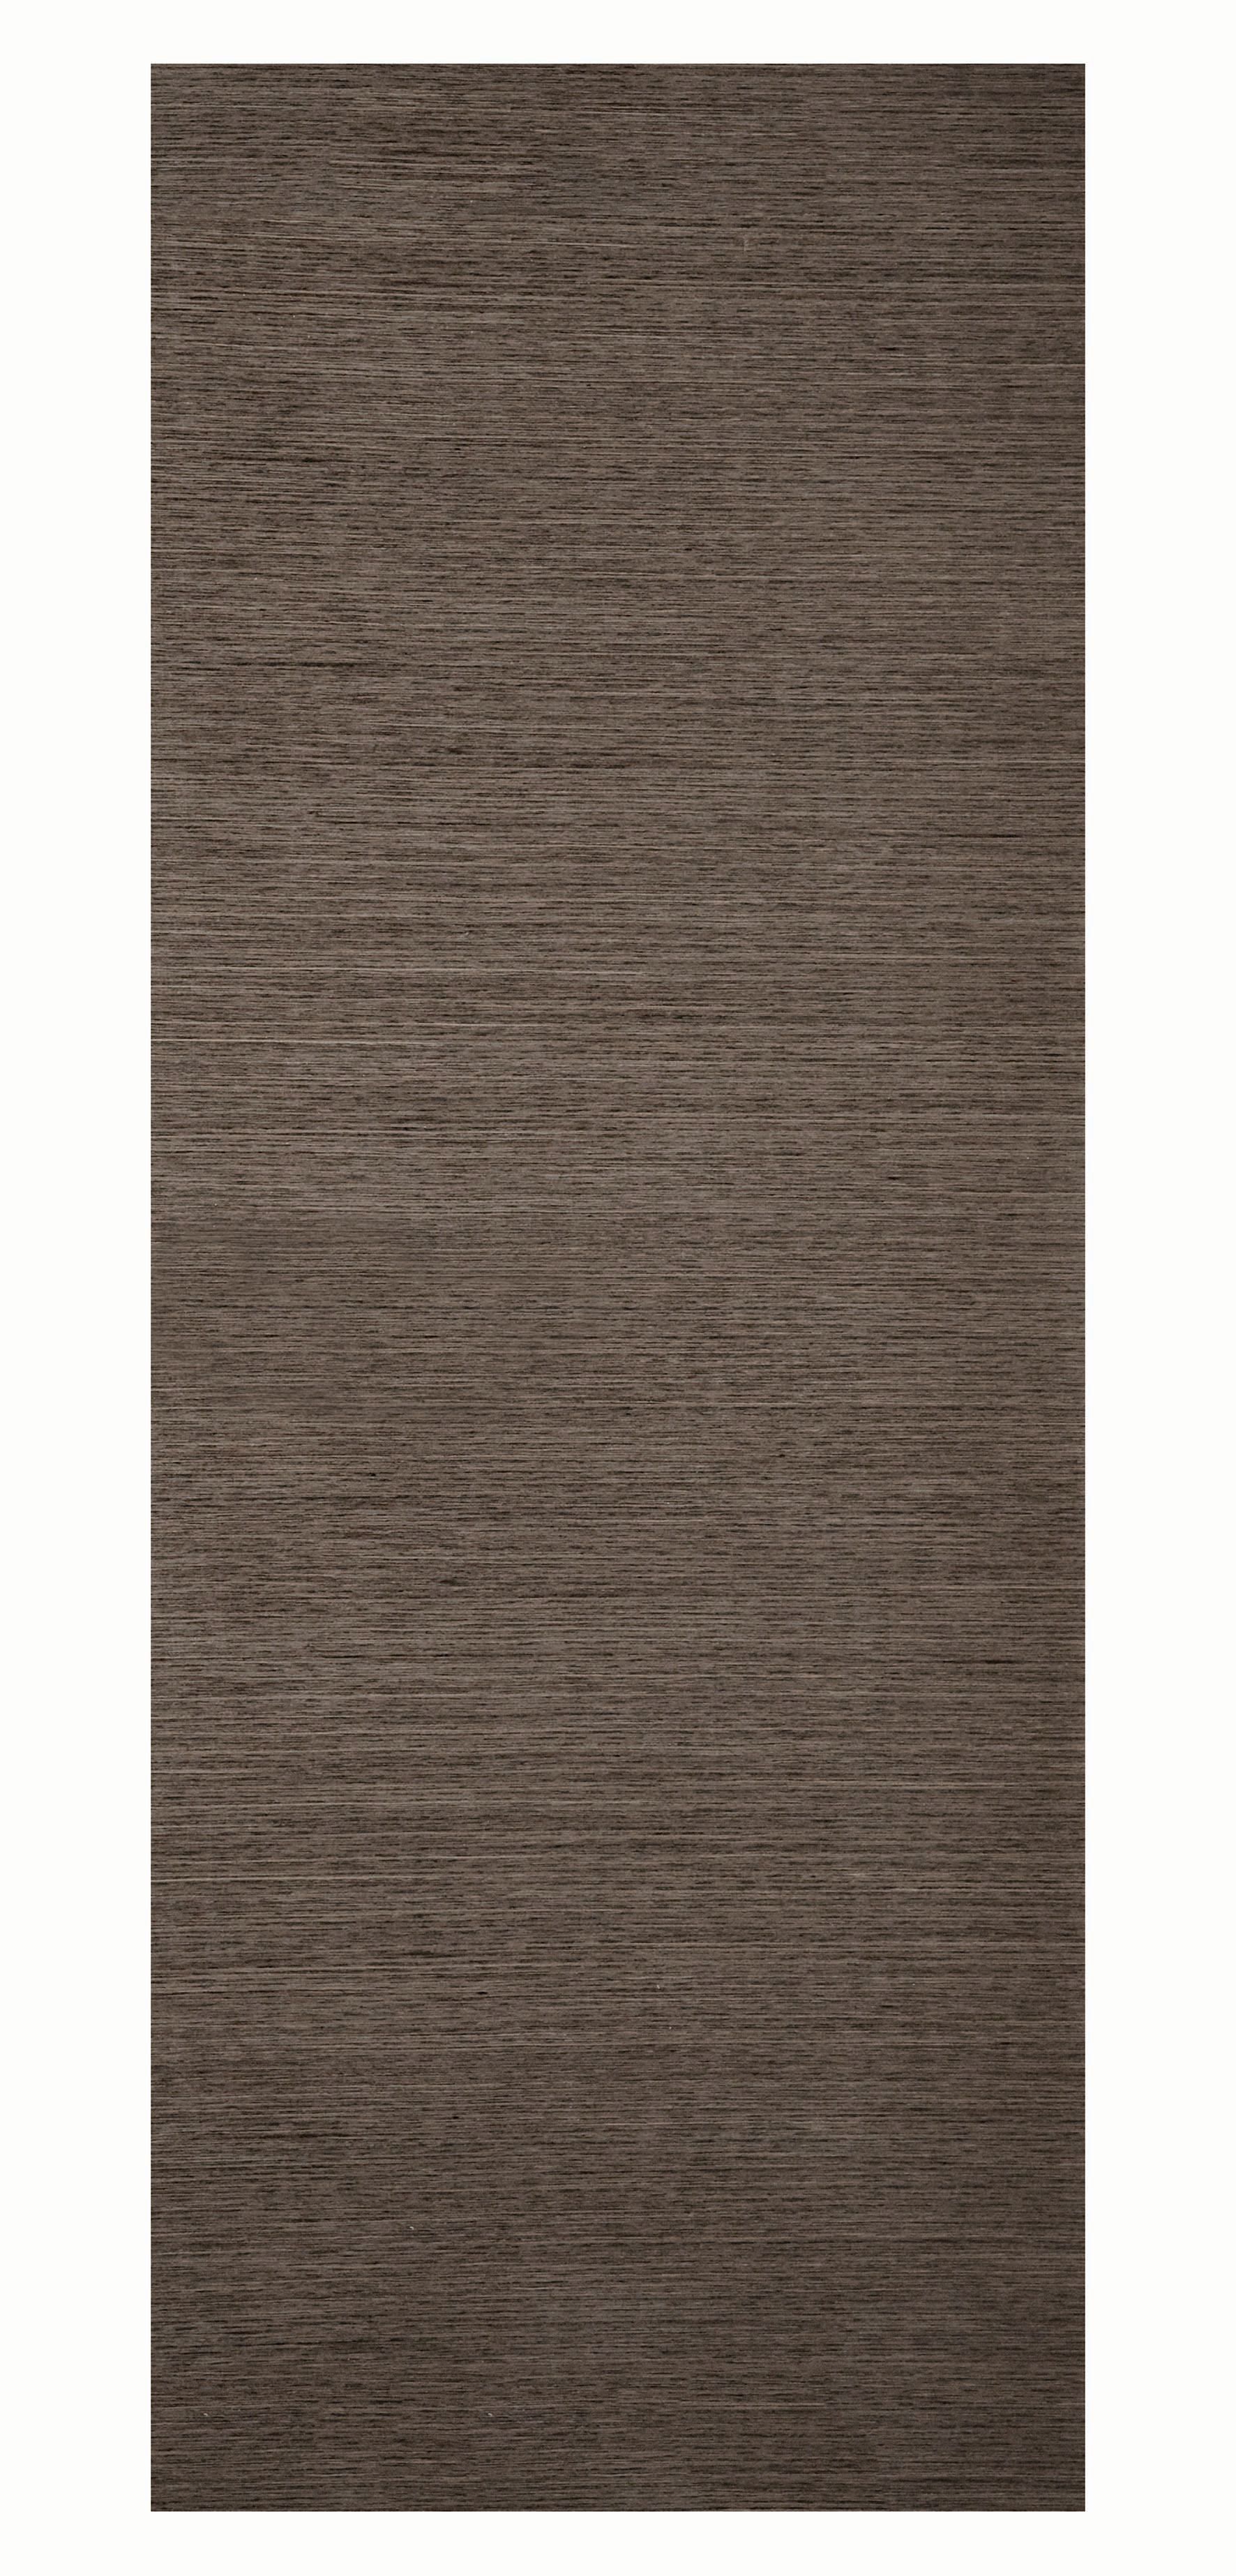 Wickes Milan Charcoal Grey Real Wood Flush Internal Door - 1981mm x 686mm